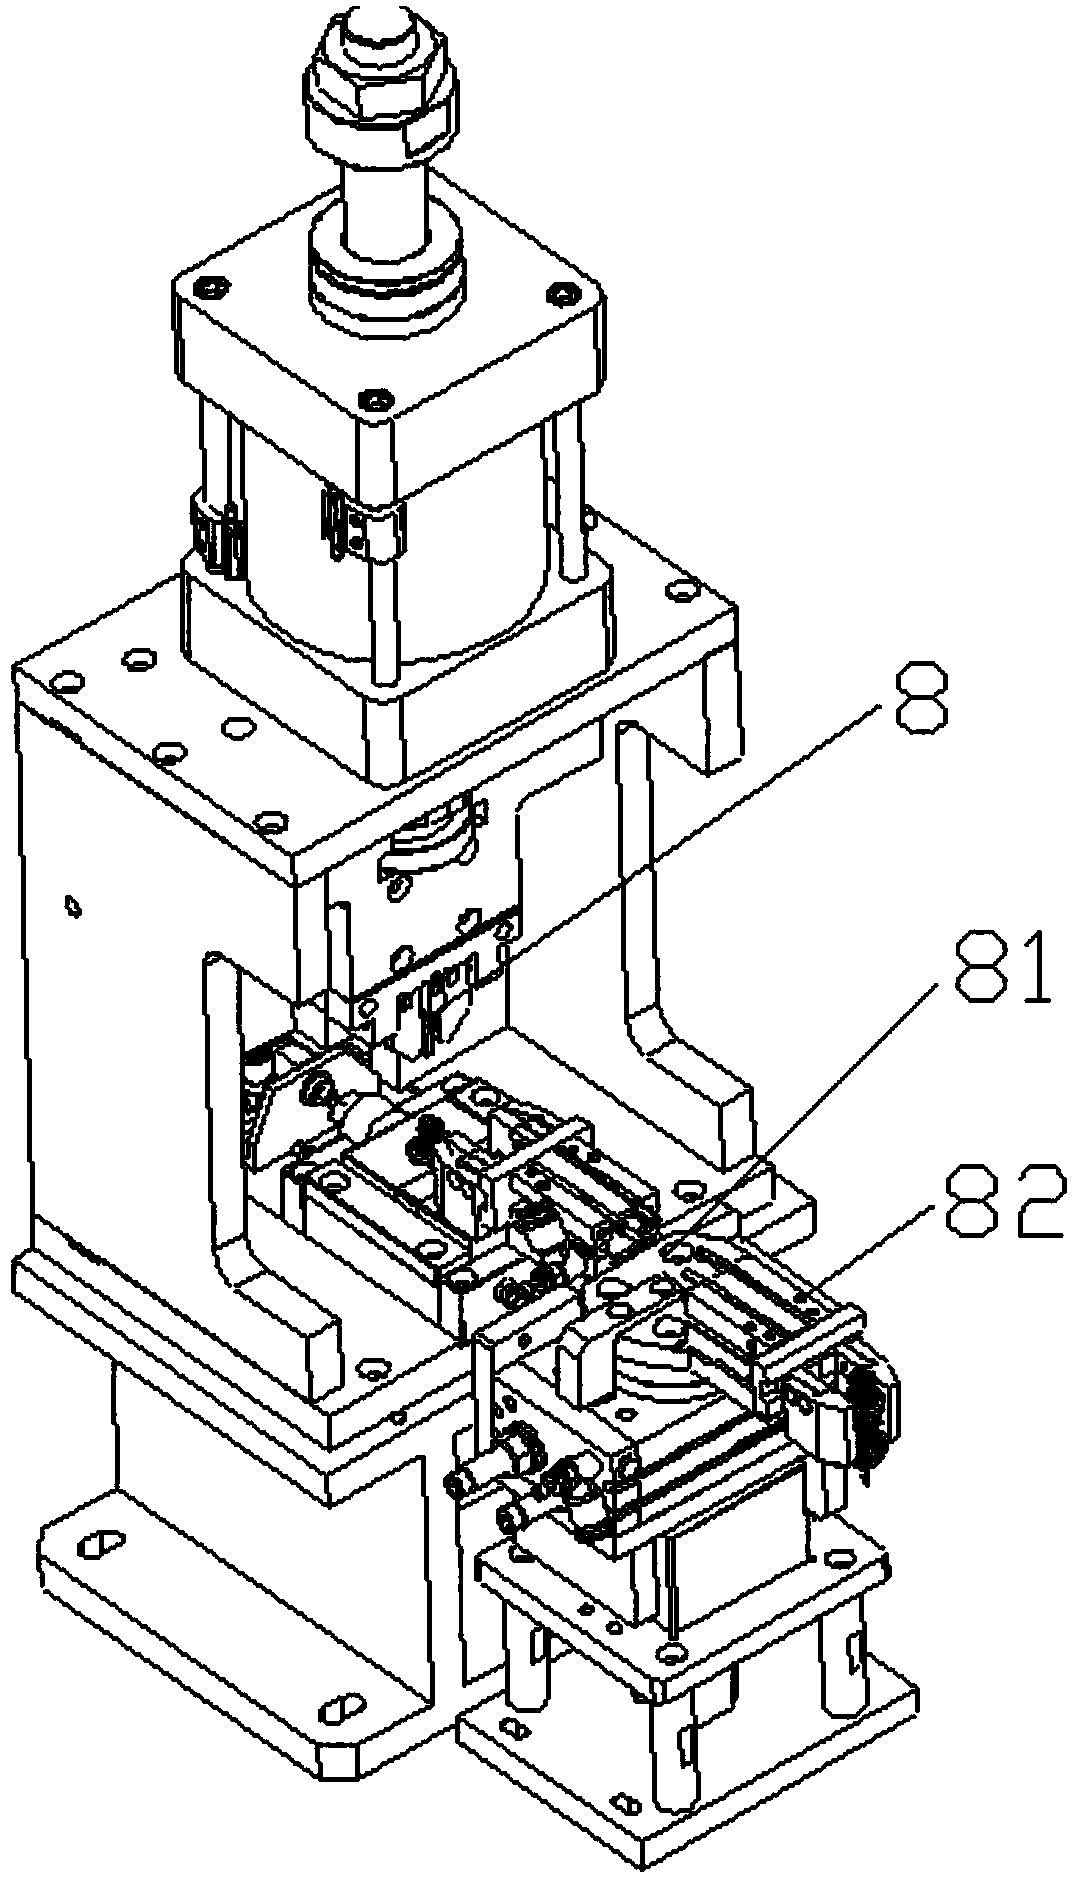 Electromagnetic valve assembling machine